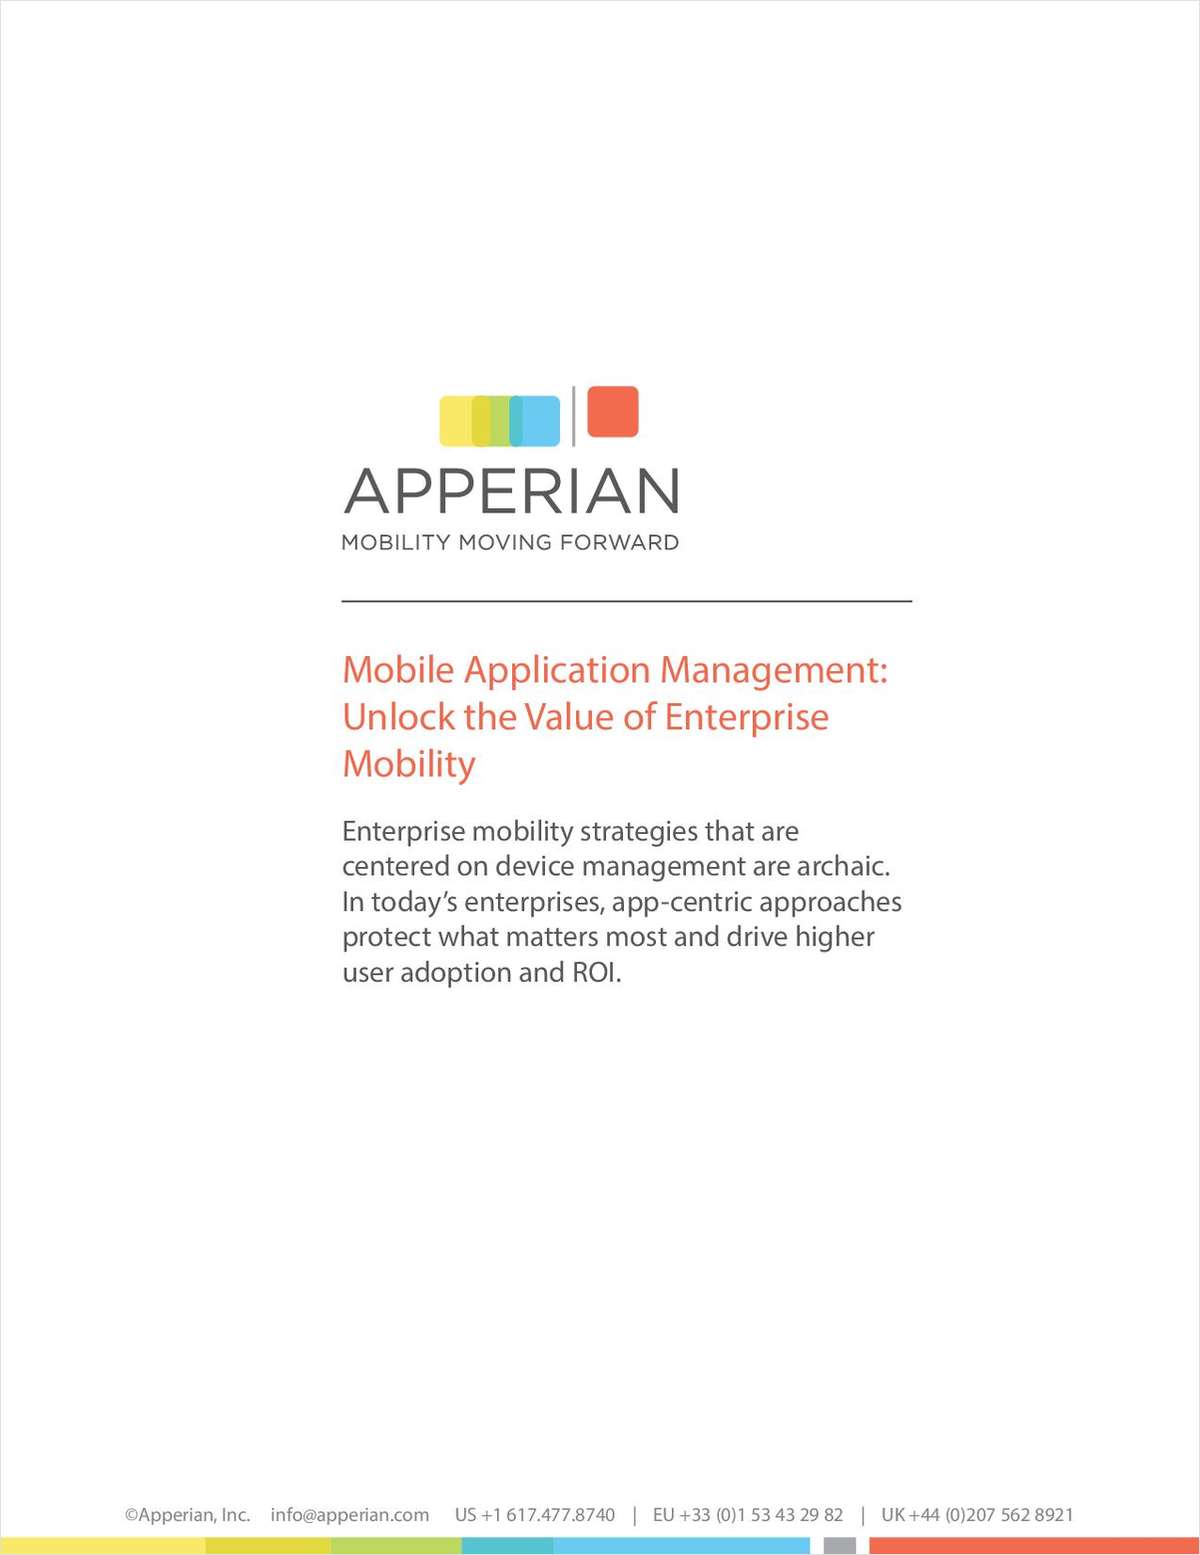 Unlock the Value of Enterprise Mobility